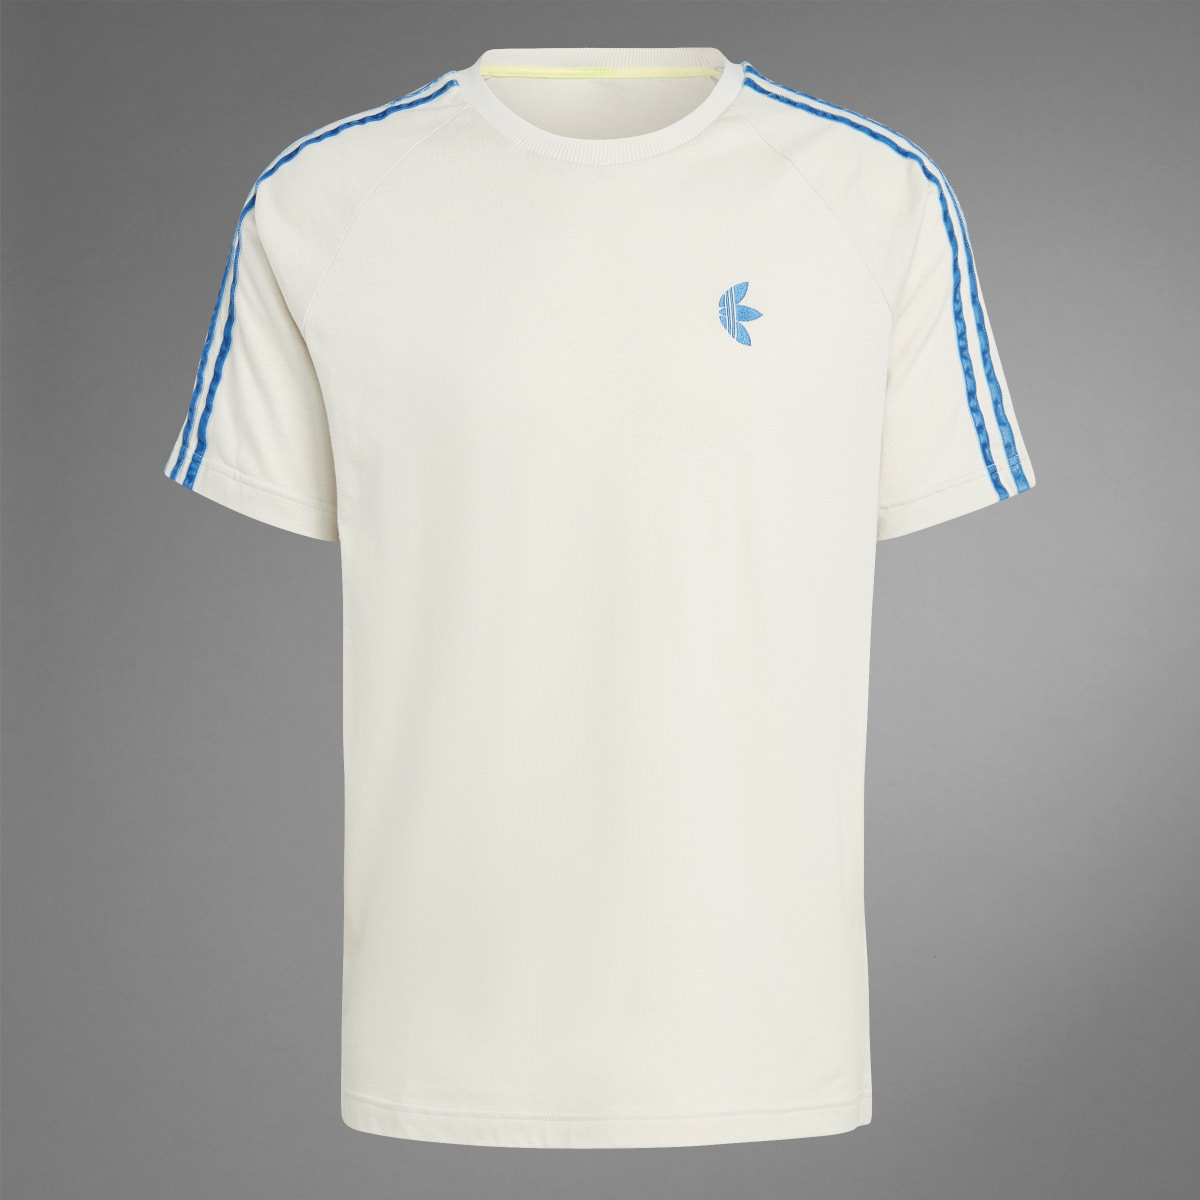 Adidas Indigo Herz Fur T-Shirt. 10